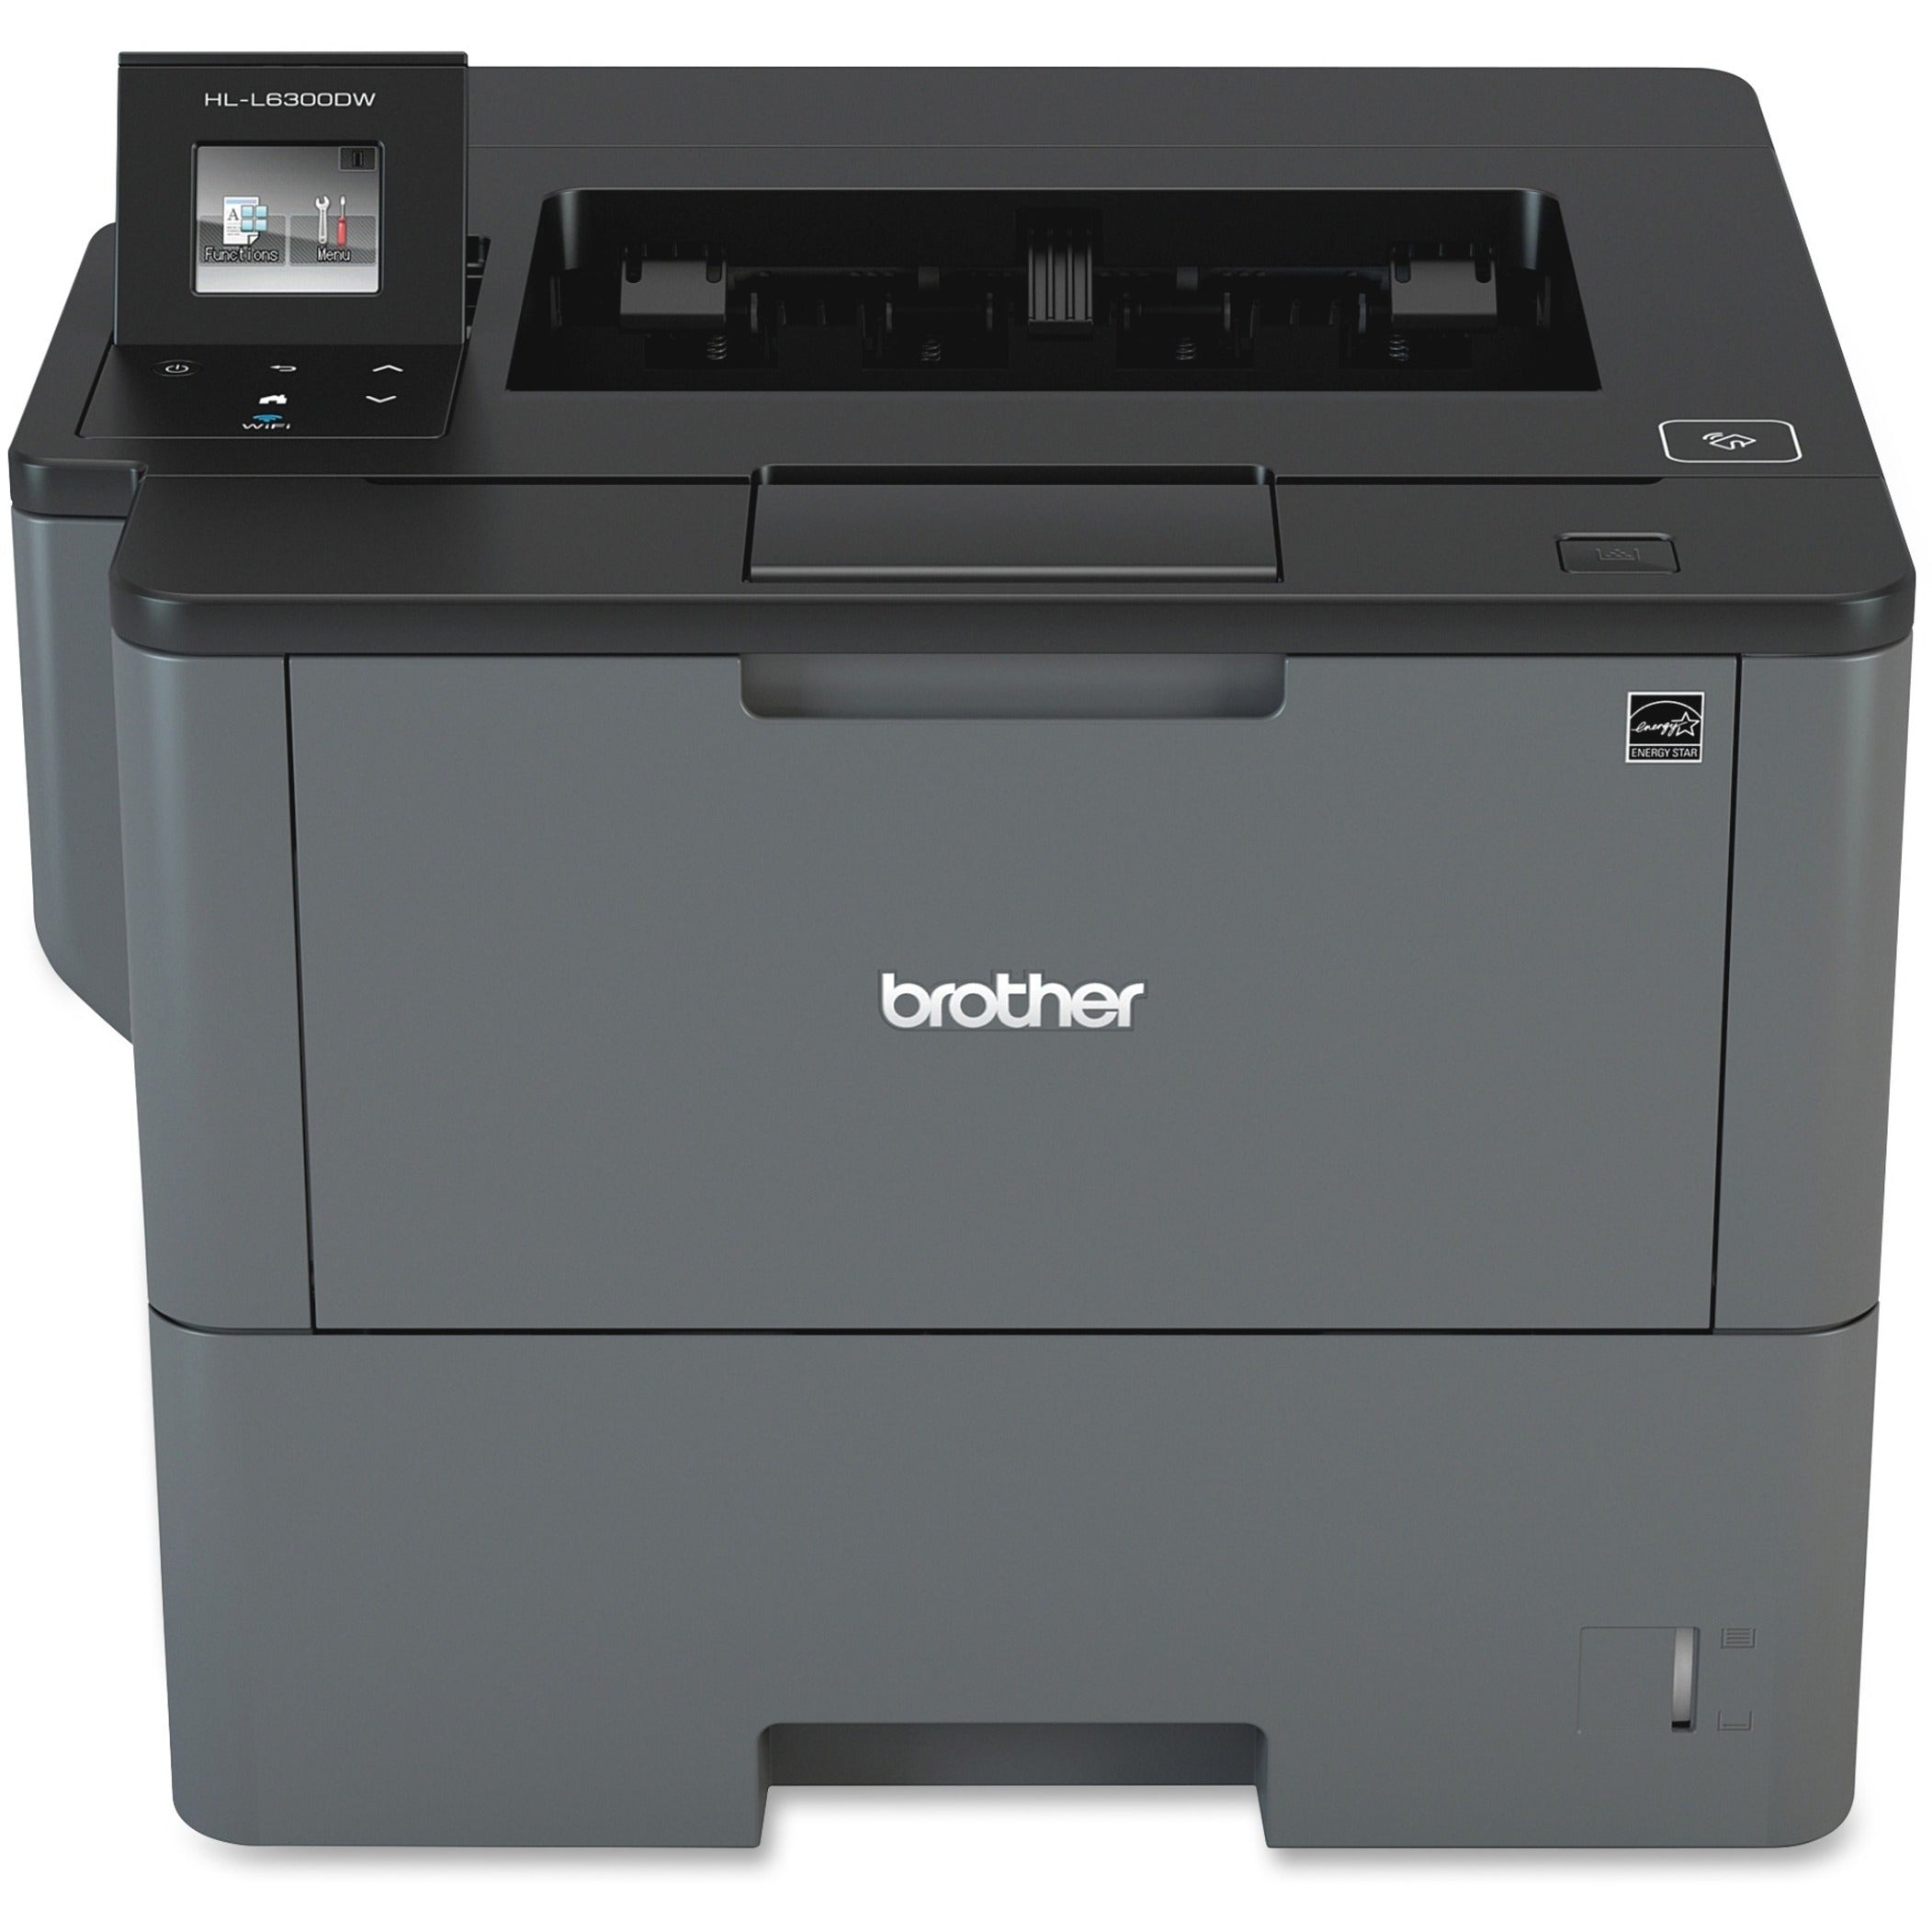 Brother HLL6300DW HL-L6300DW Monochrome Laser Printer, 48ppm, 520-Sheet Capacity